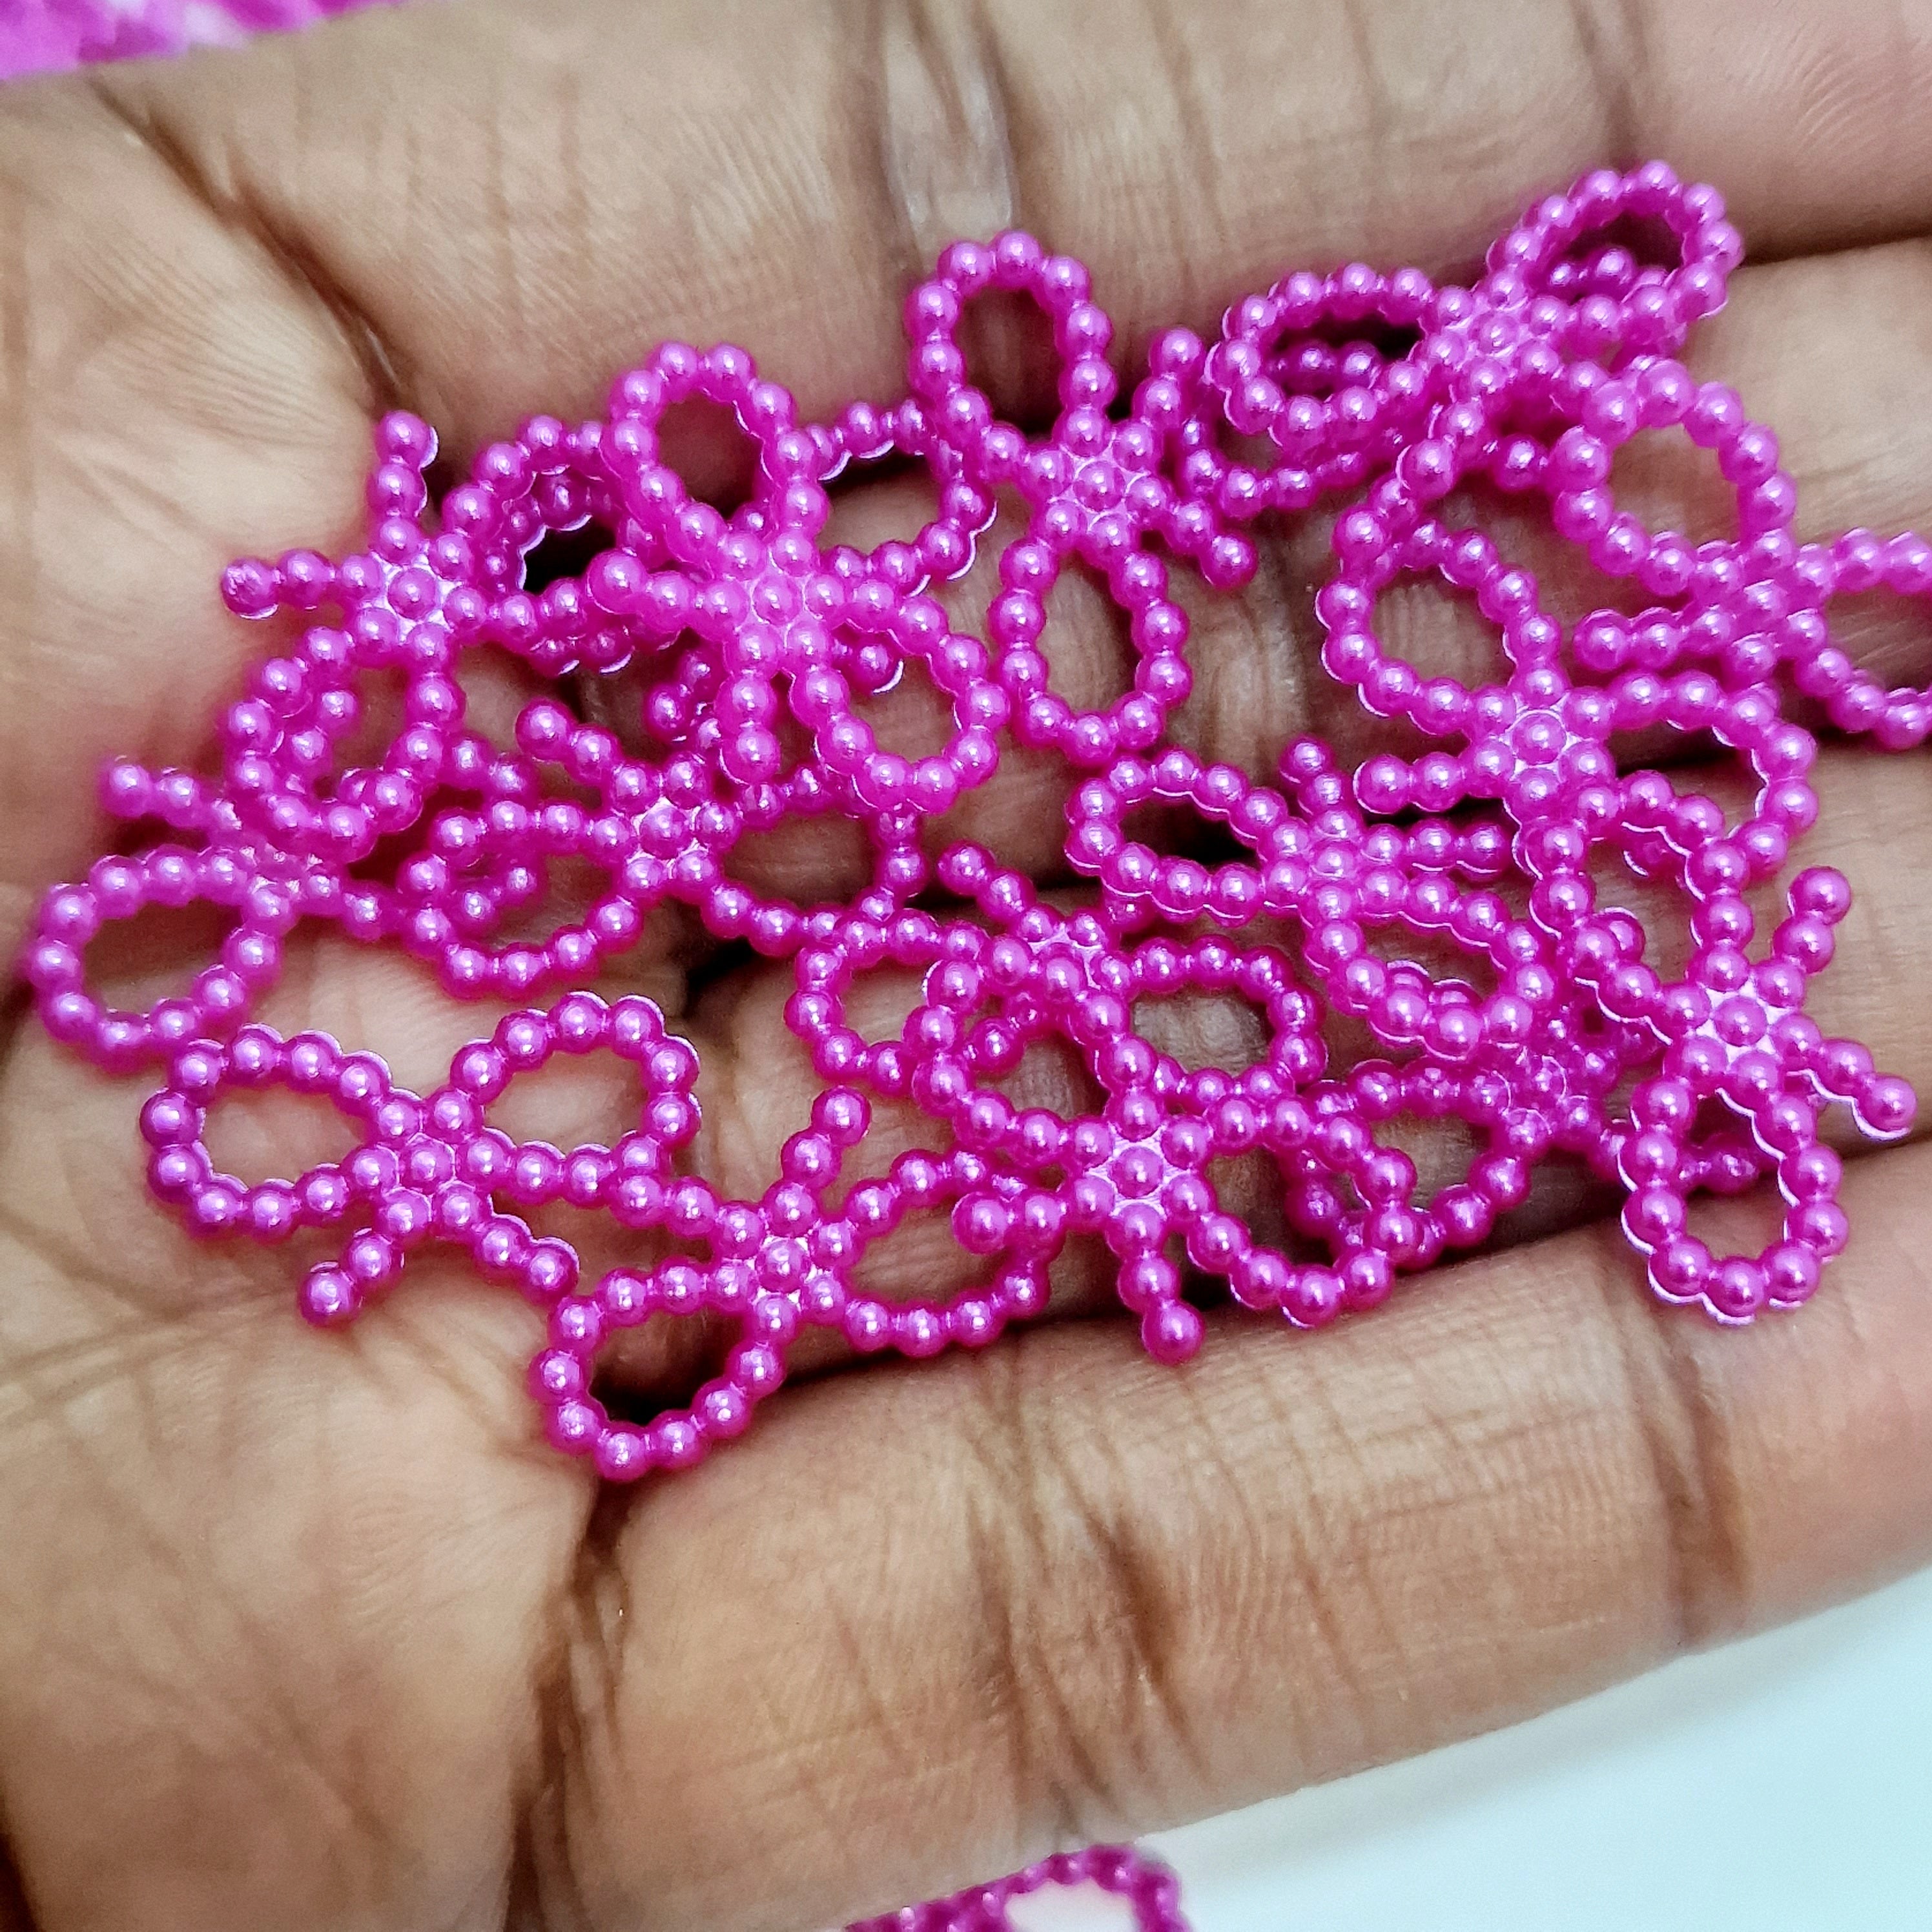 MajorCrafts 150pcs 18mm x 10mm Dark Pink Hollow Bowknot Butterfly Resin Pearls